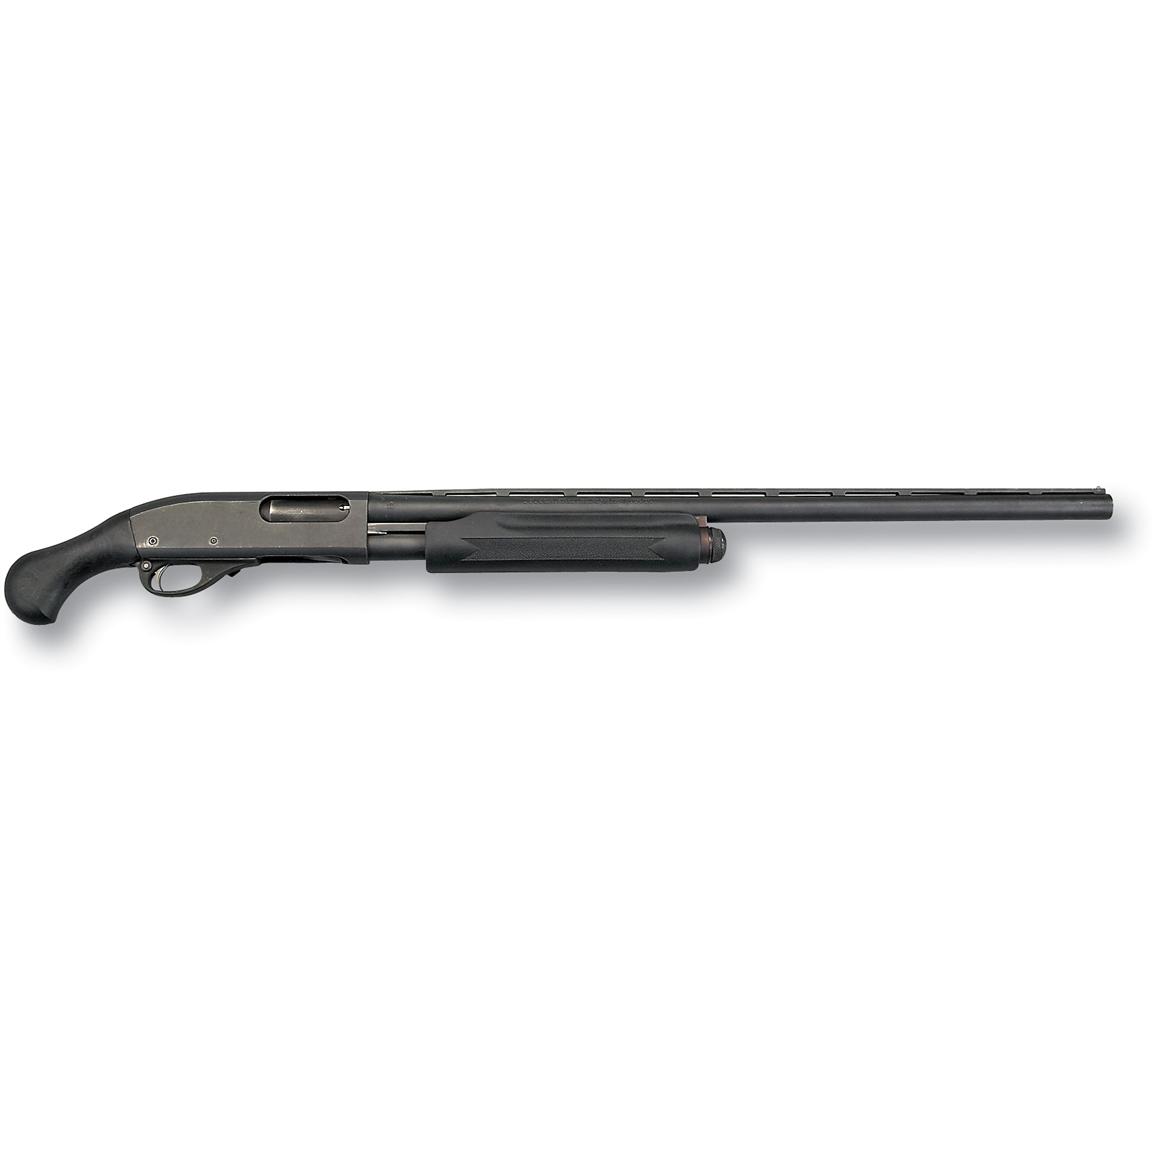 Speedfeed Pistol Grip Stock Set For Mossberg 500 590 90781